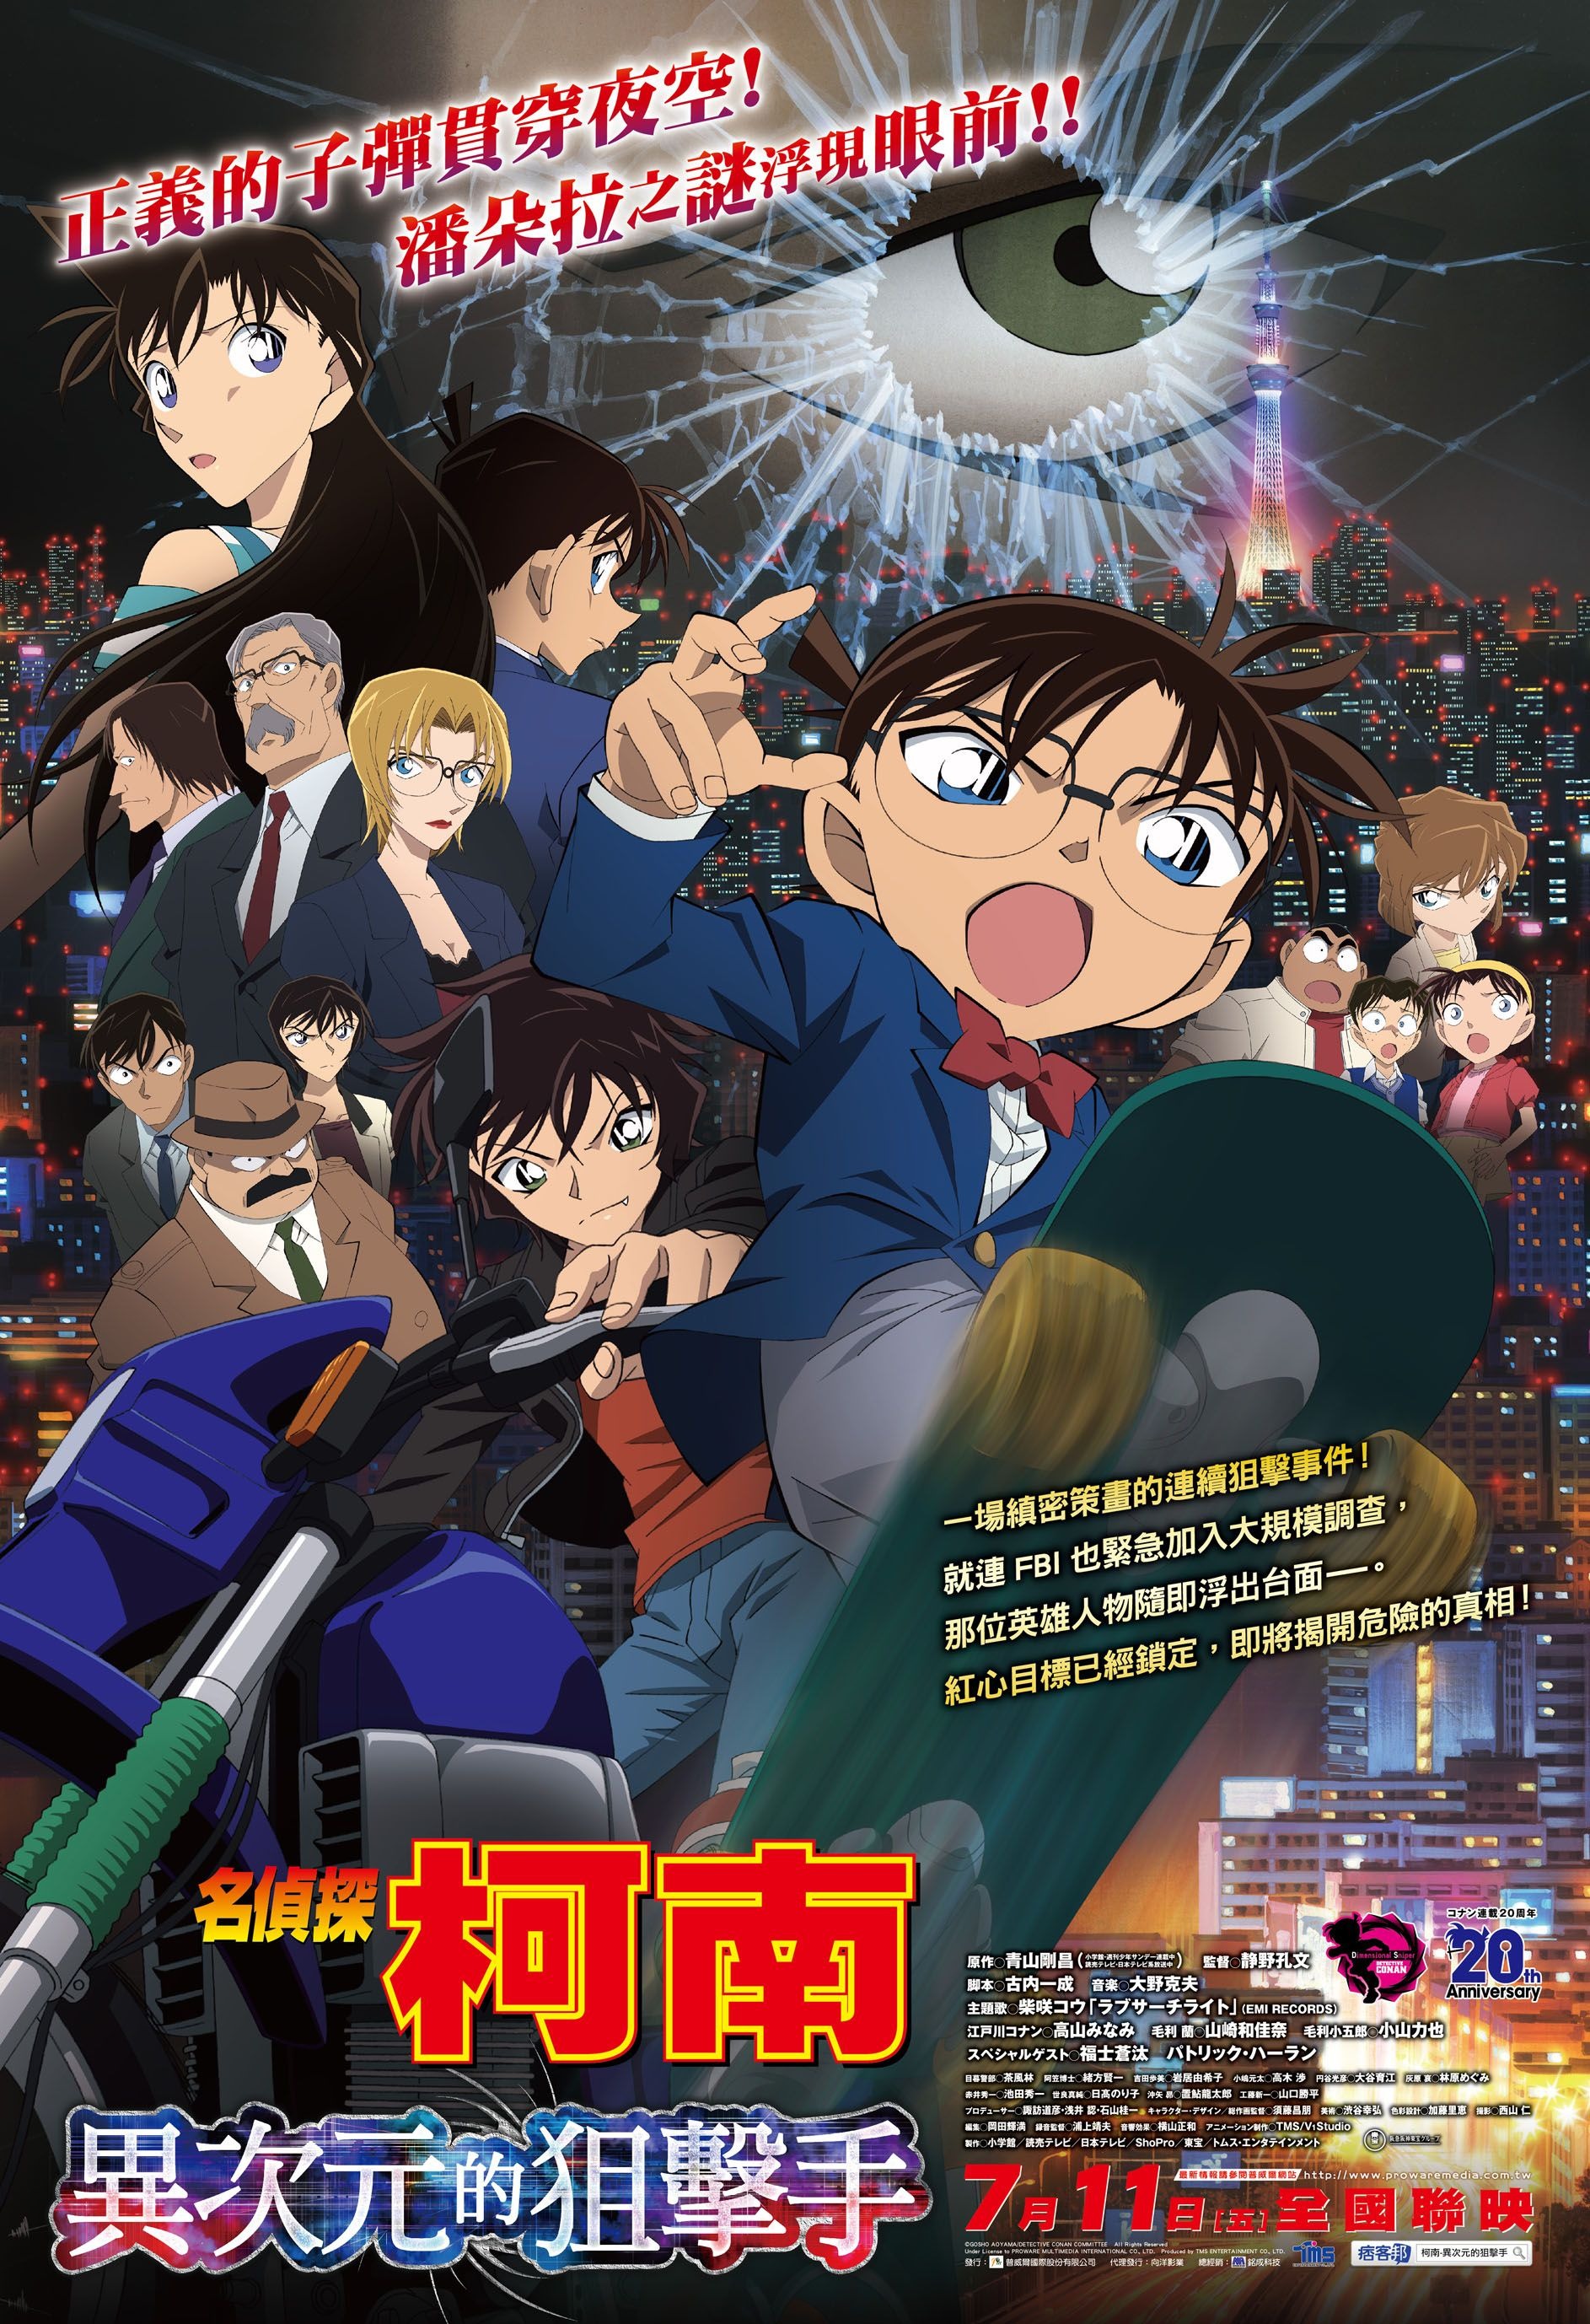 Mega Sized Movie Poster Image for Meitantei Conan: Senritsu no furu sukoa 